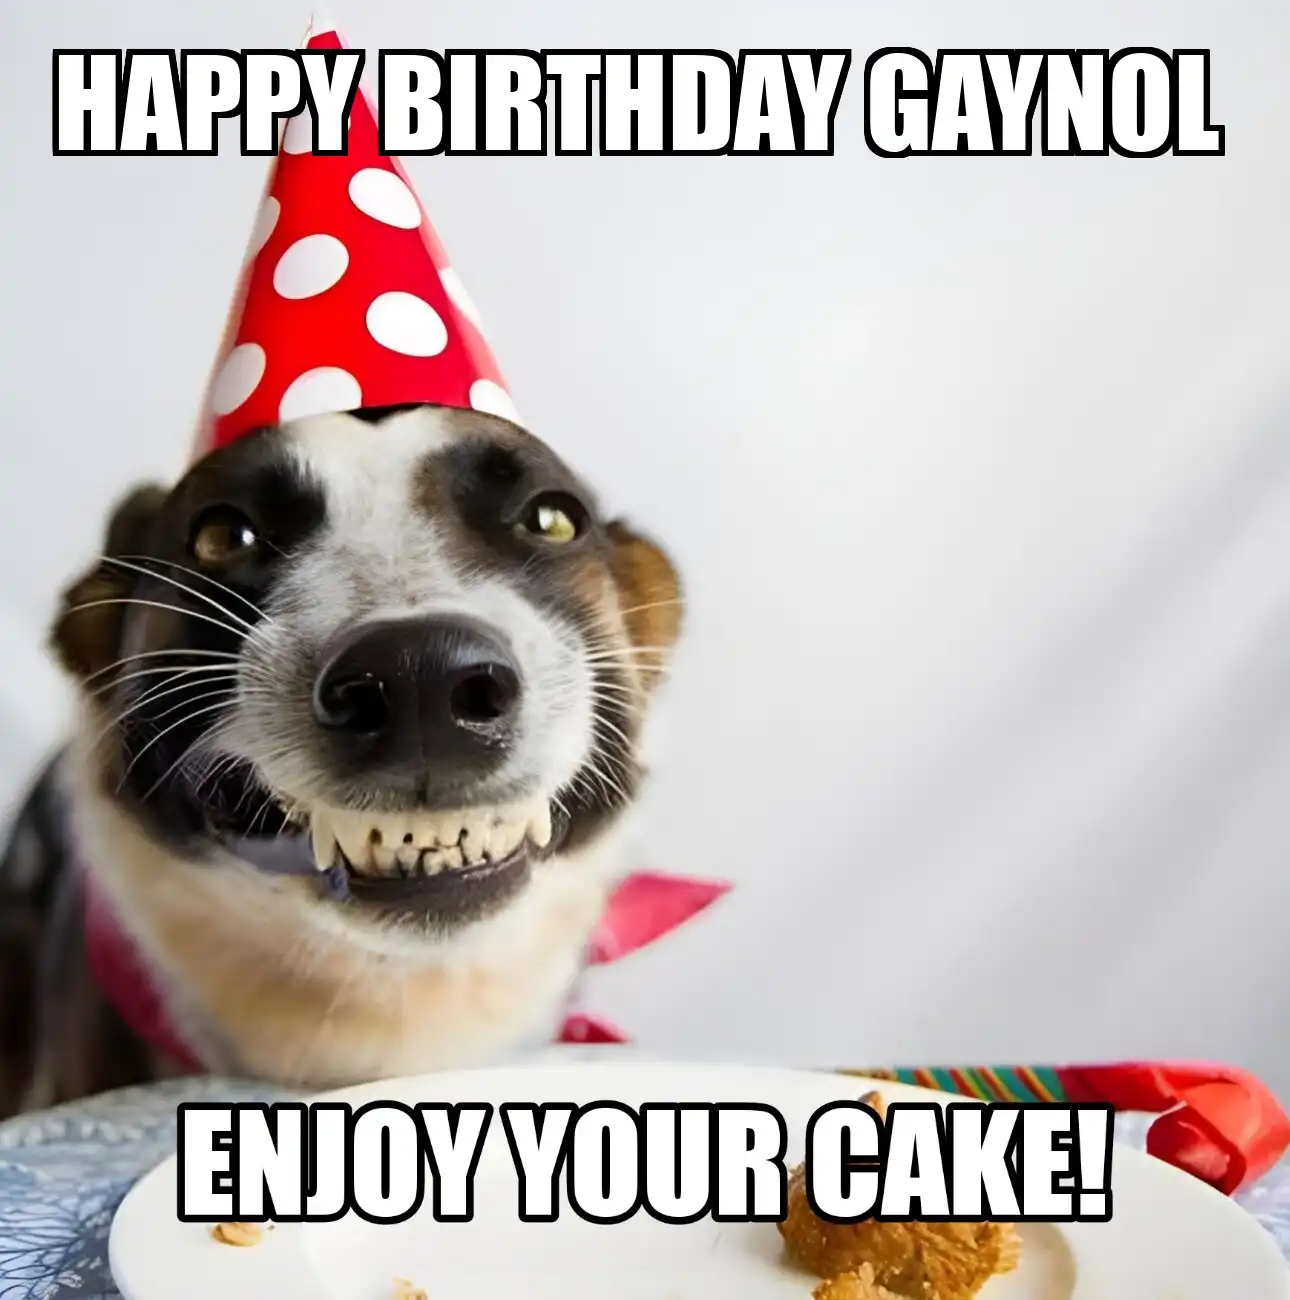 Happy Birthday Gaynol Enjoy Your Cake Dog Meme